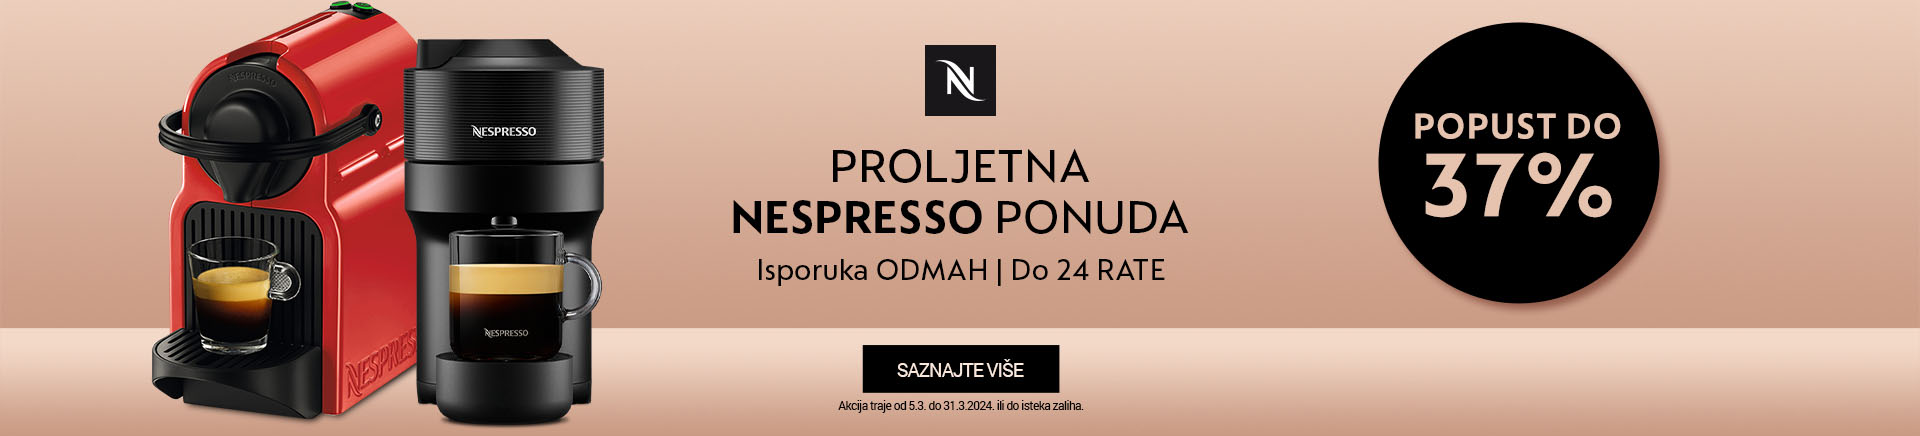 HR Nespresso MOBILE 760 X 872.jpg